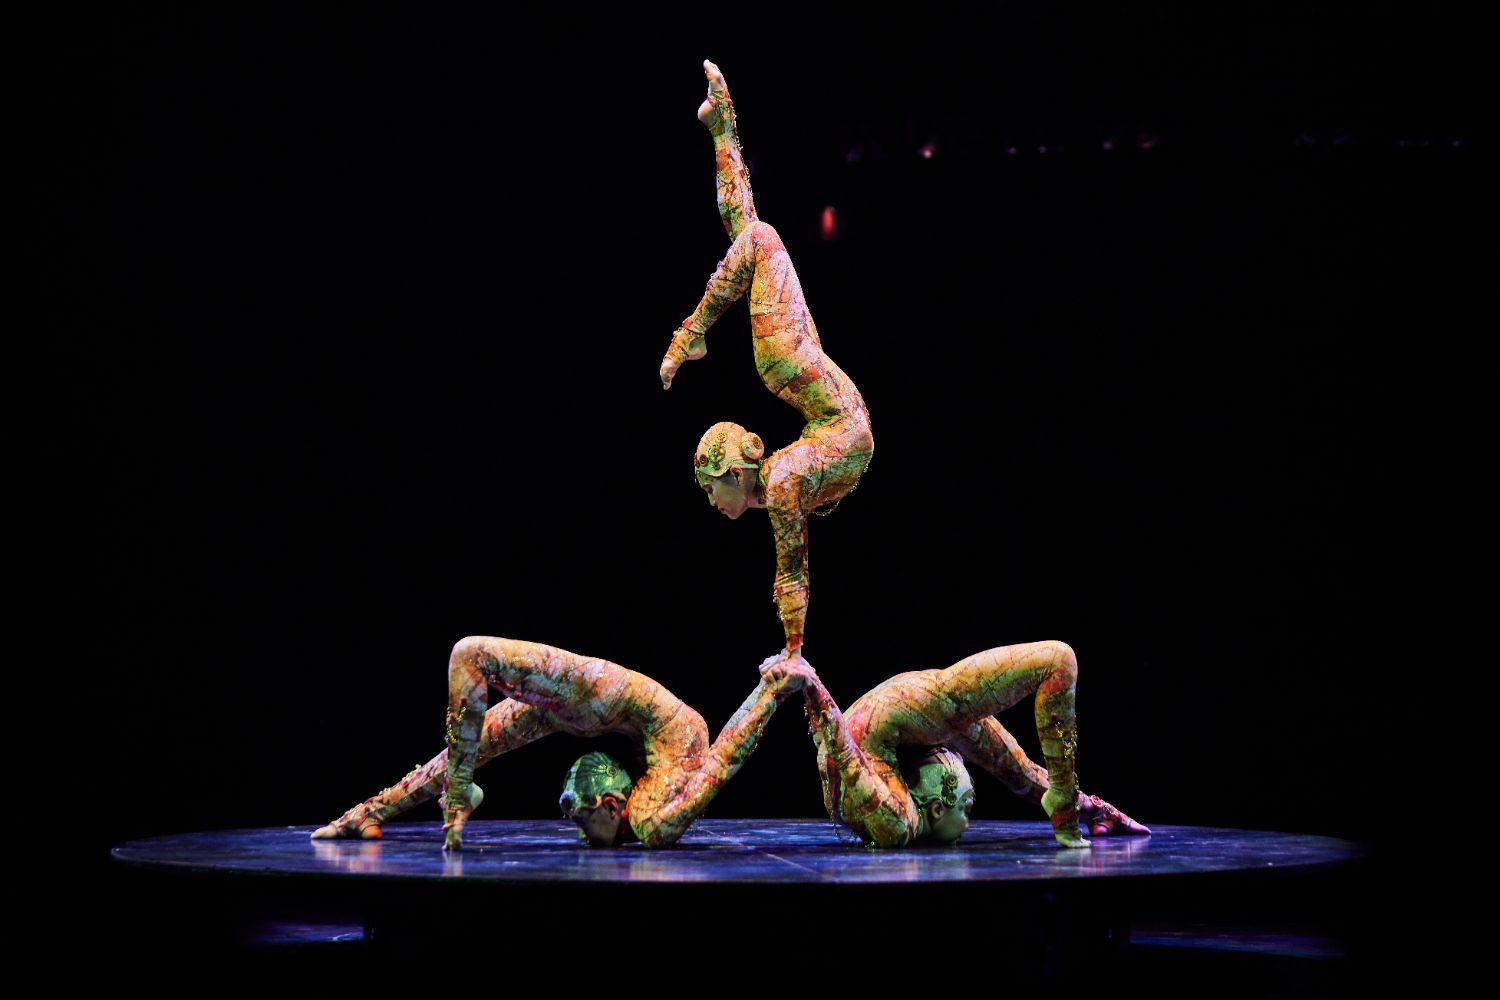 PHOTO: Matt Beard | The South Pasadenan | The contortionists in Cirque du Soleil's KOOZA